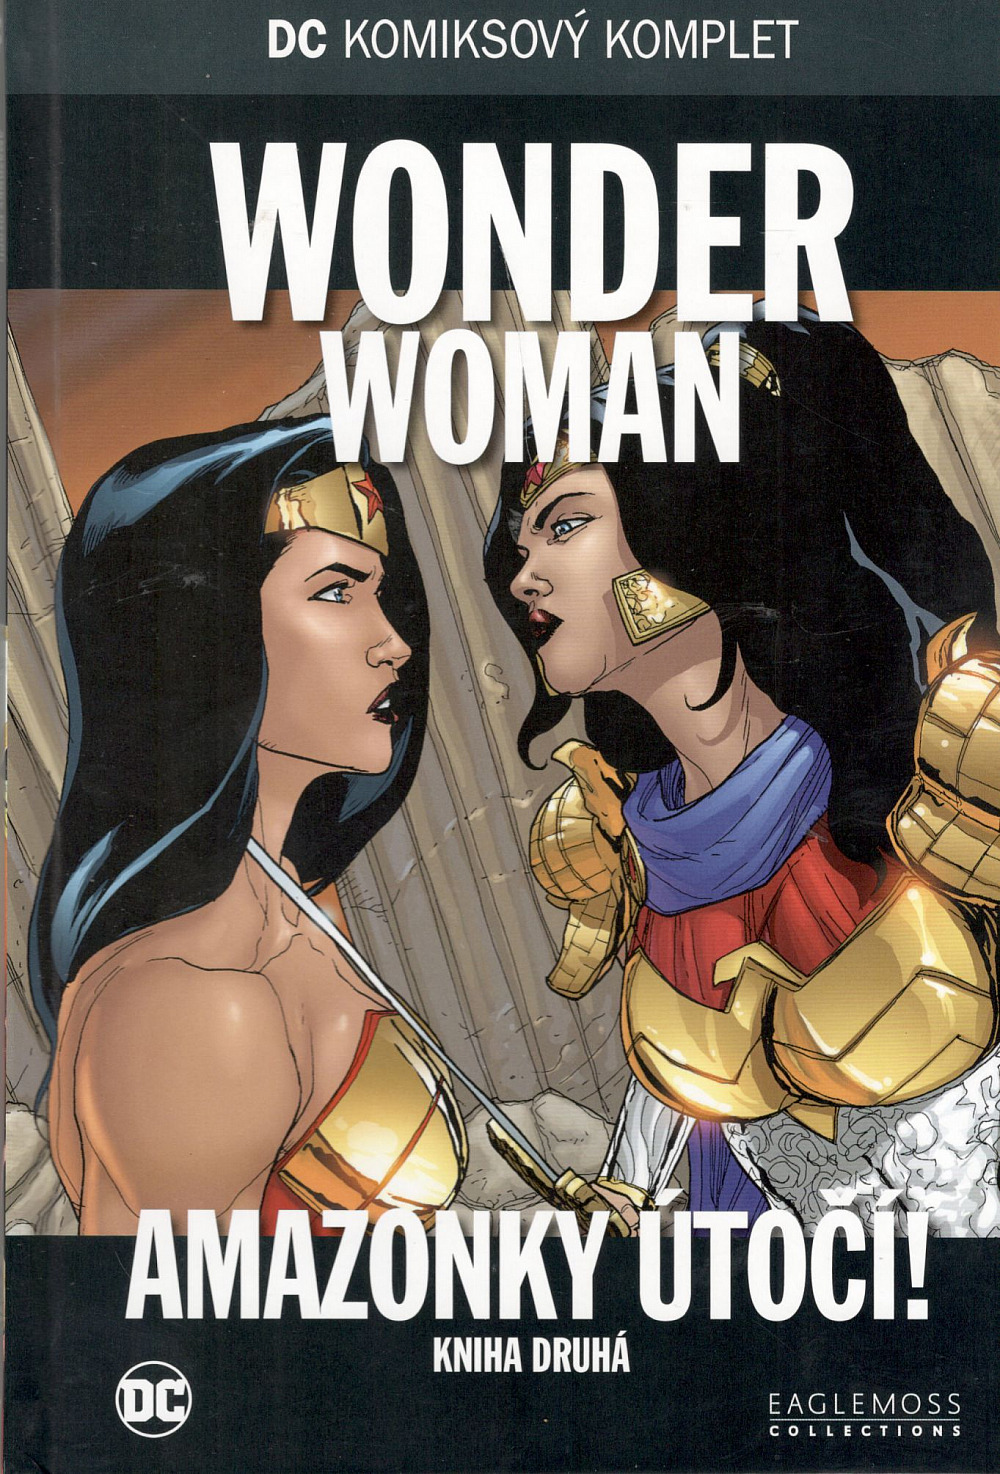 Wonder Woman: Amazonky útočí!: Kniha druhá